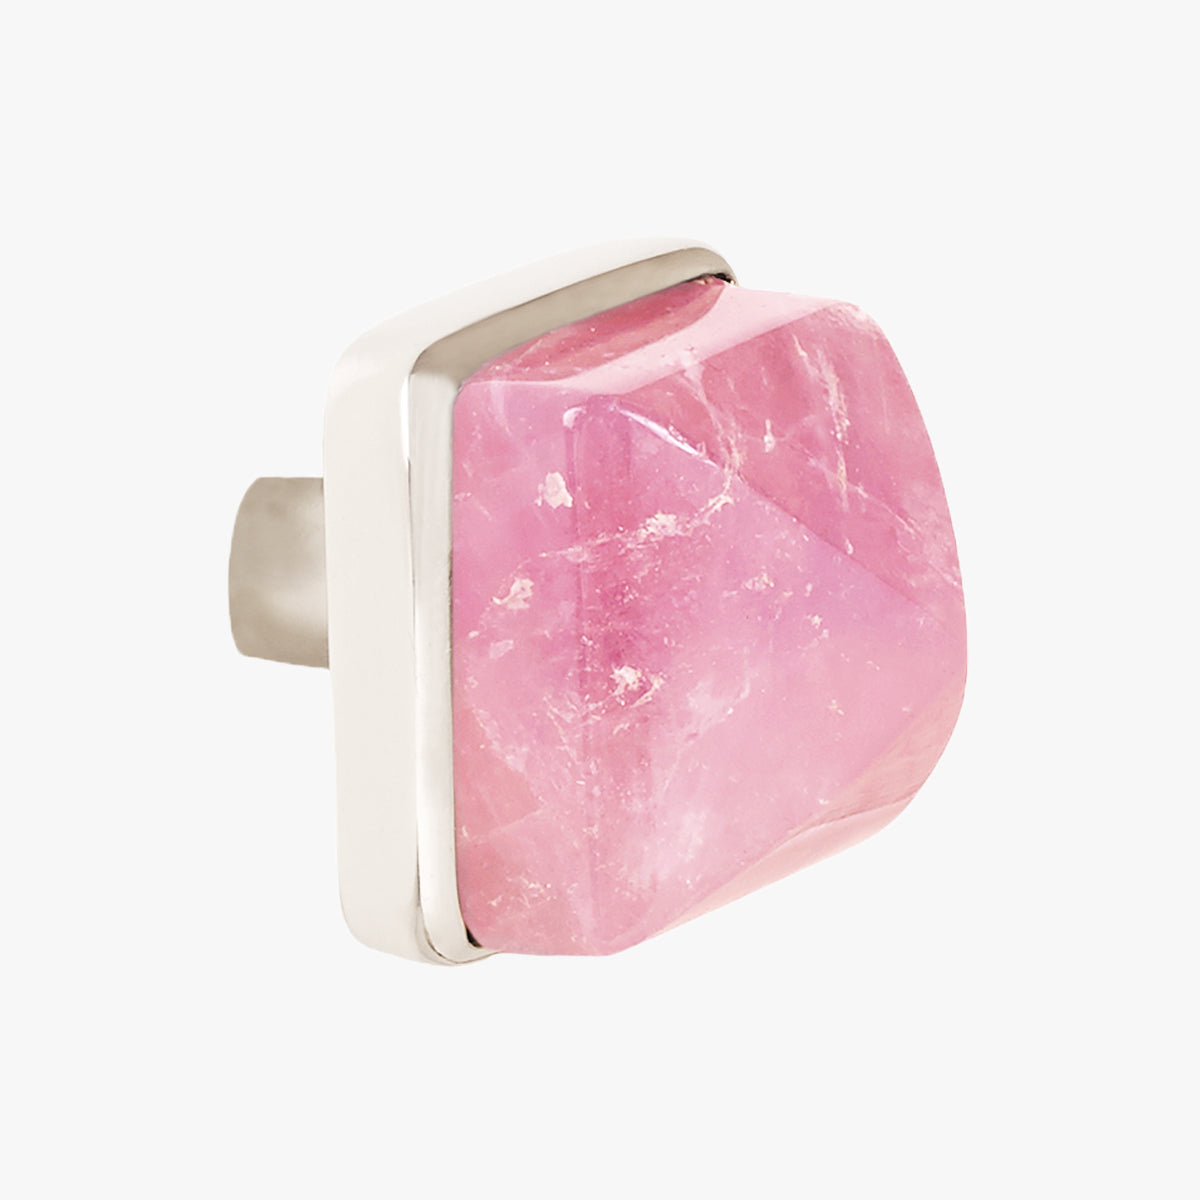 Hayden knob handmade in rose quartz crystal and polished chrome by Matthew Studios